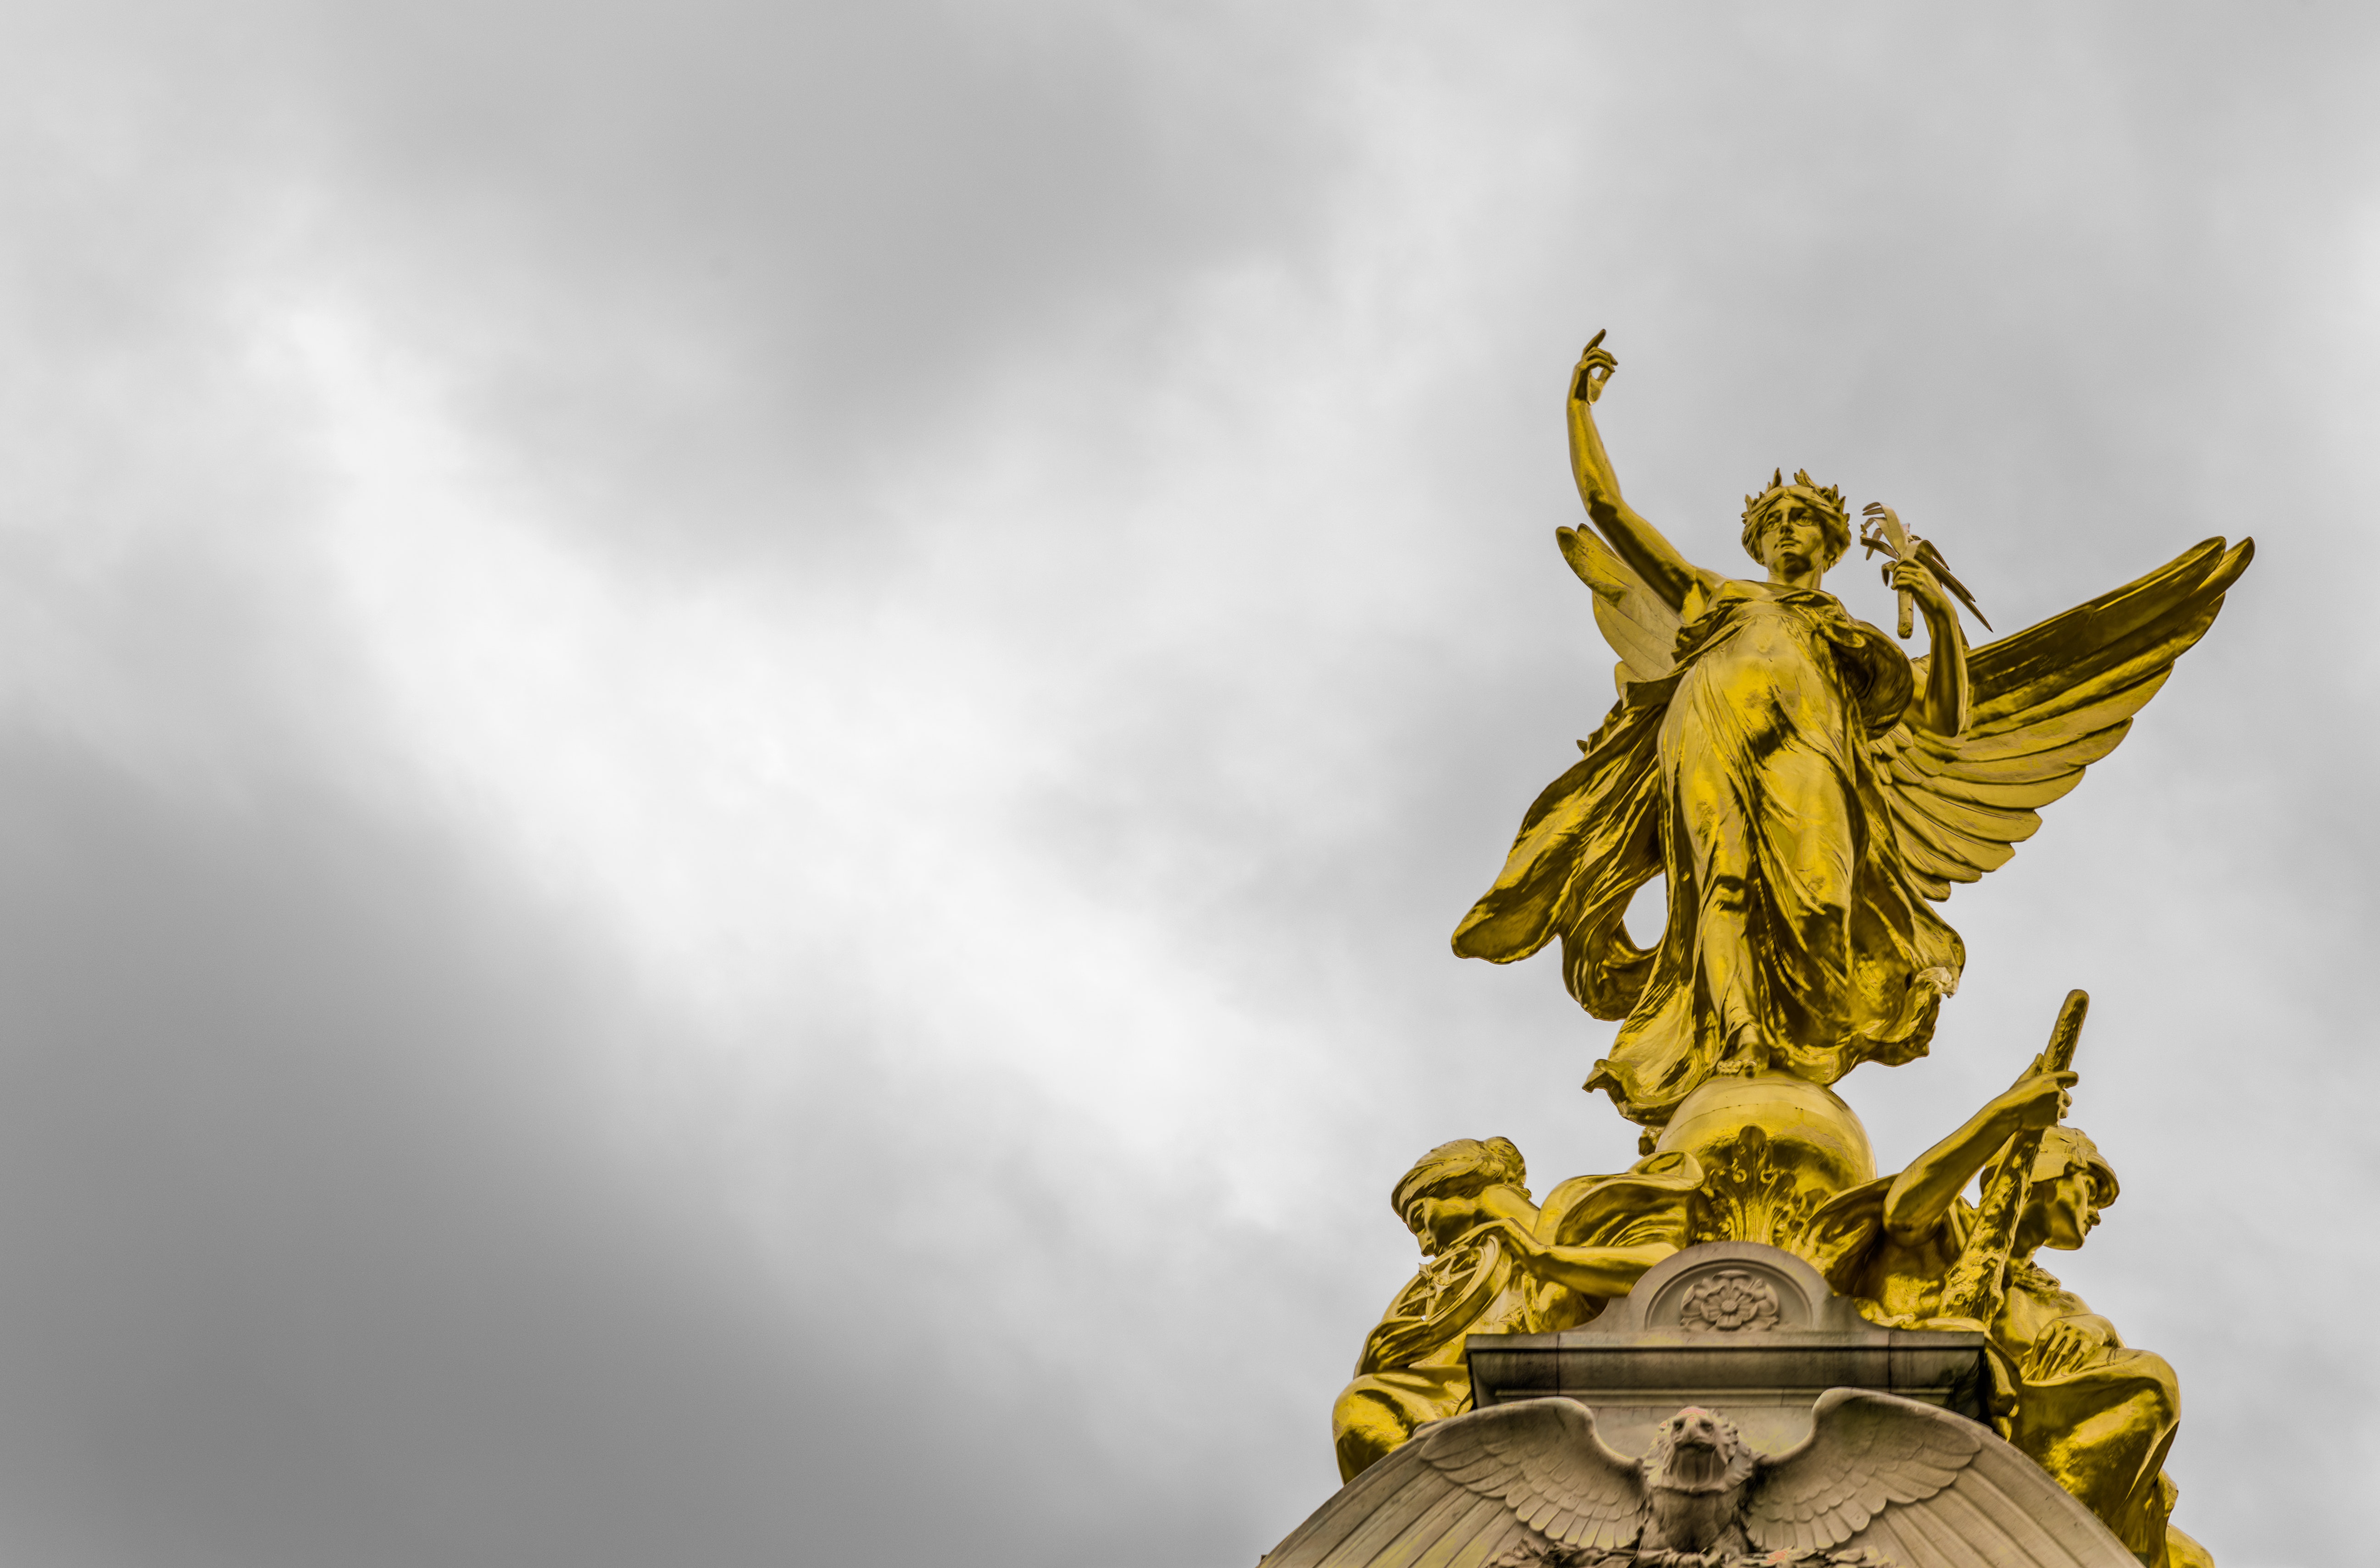 Gold angel statue under grey clouds photo